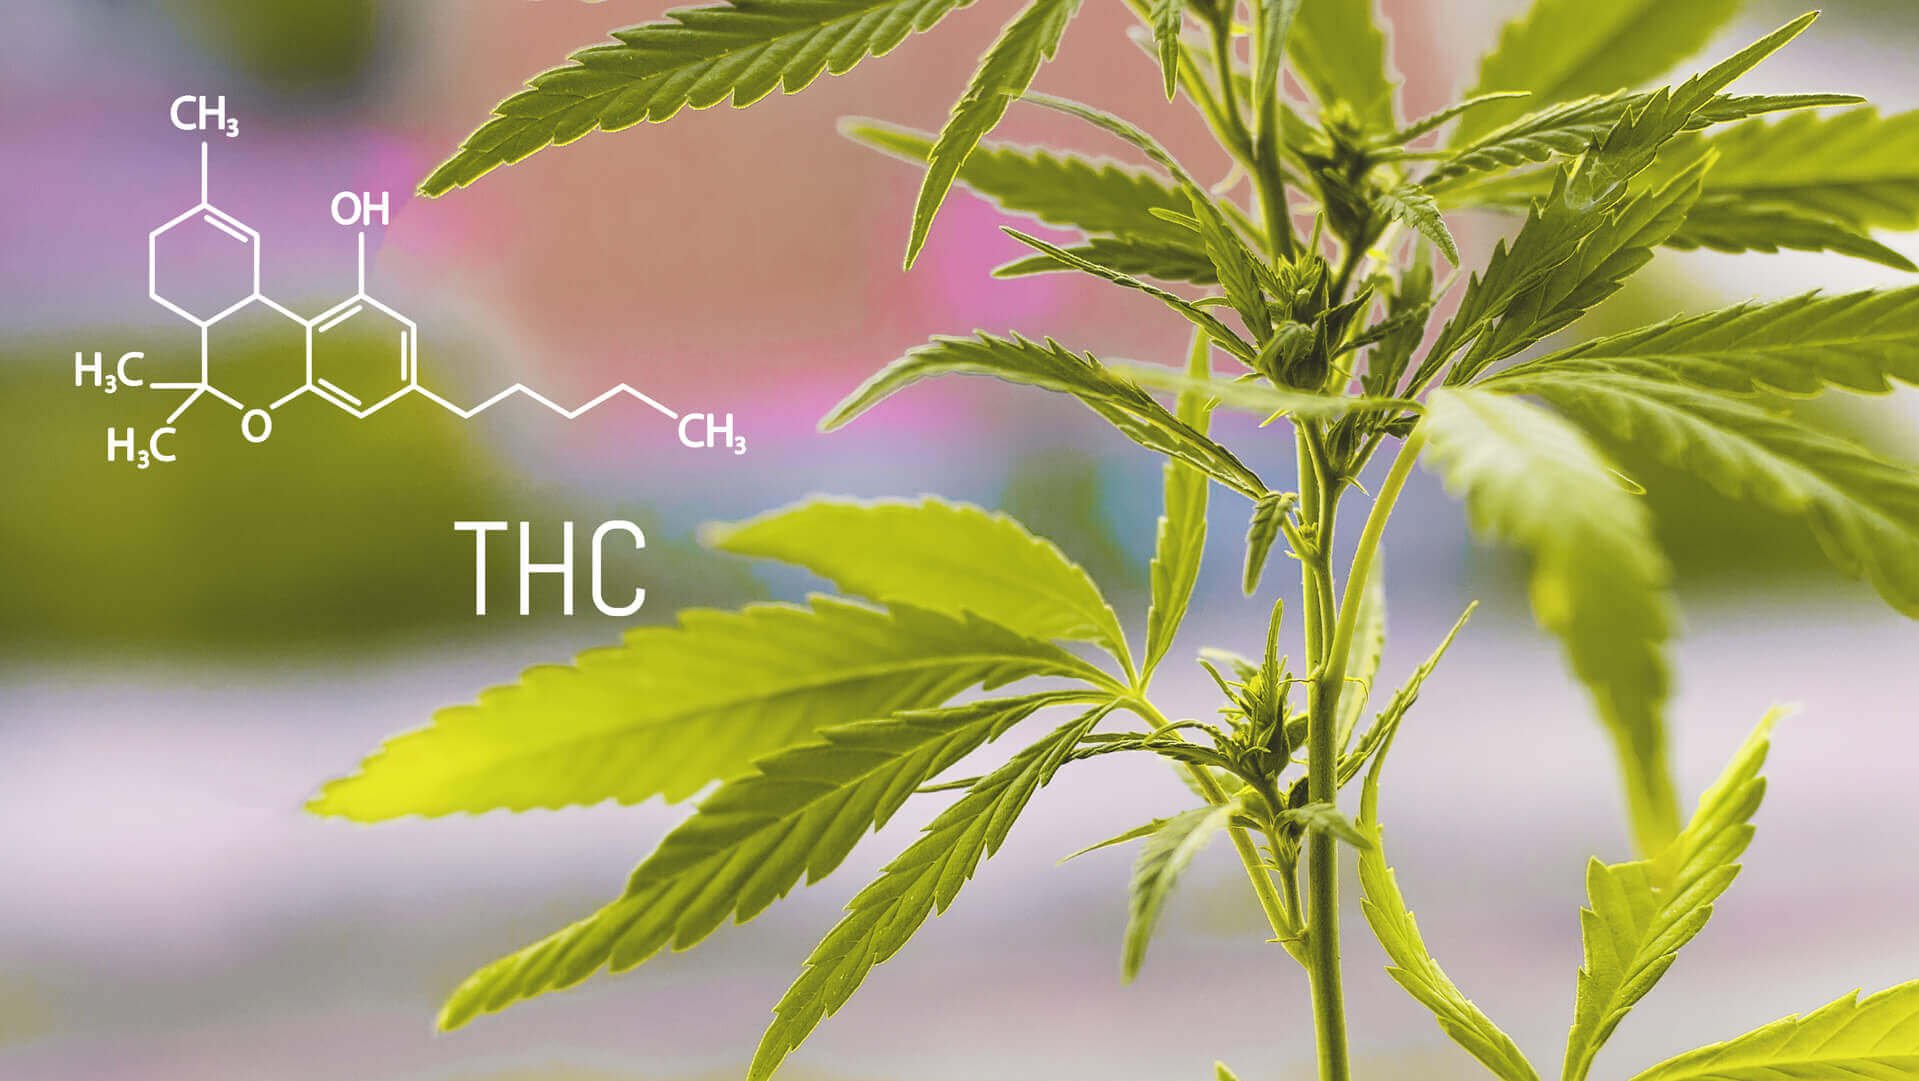 thc molecule and cannabis plant